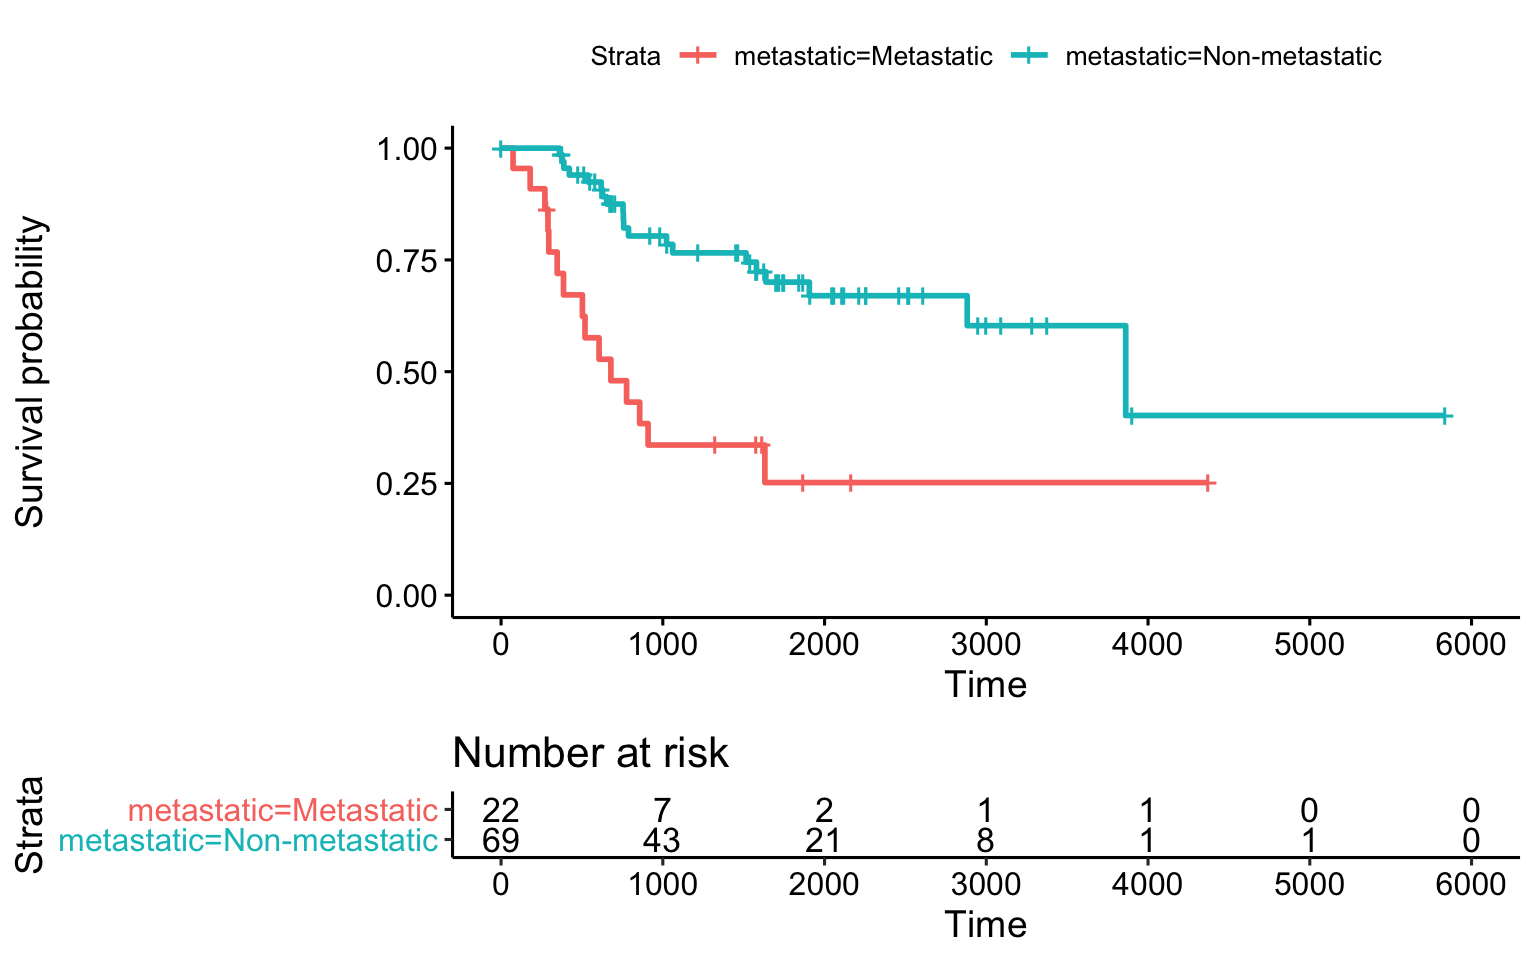 Simple Kaplan-Meier survival plot with metastatic status at diagnosis.